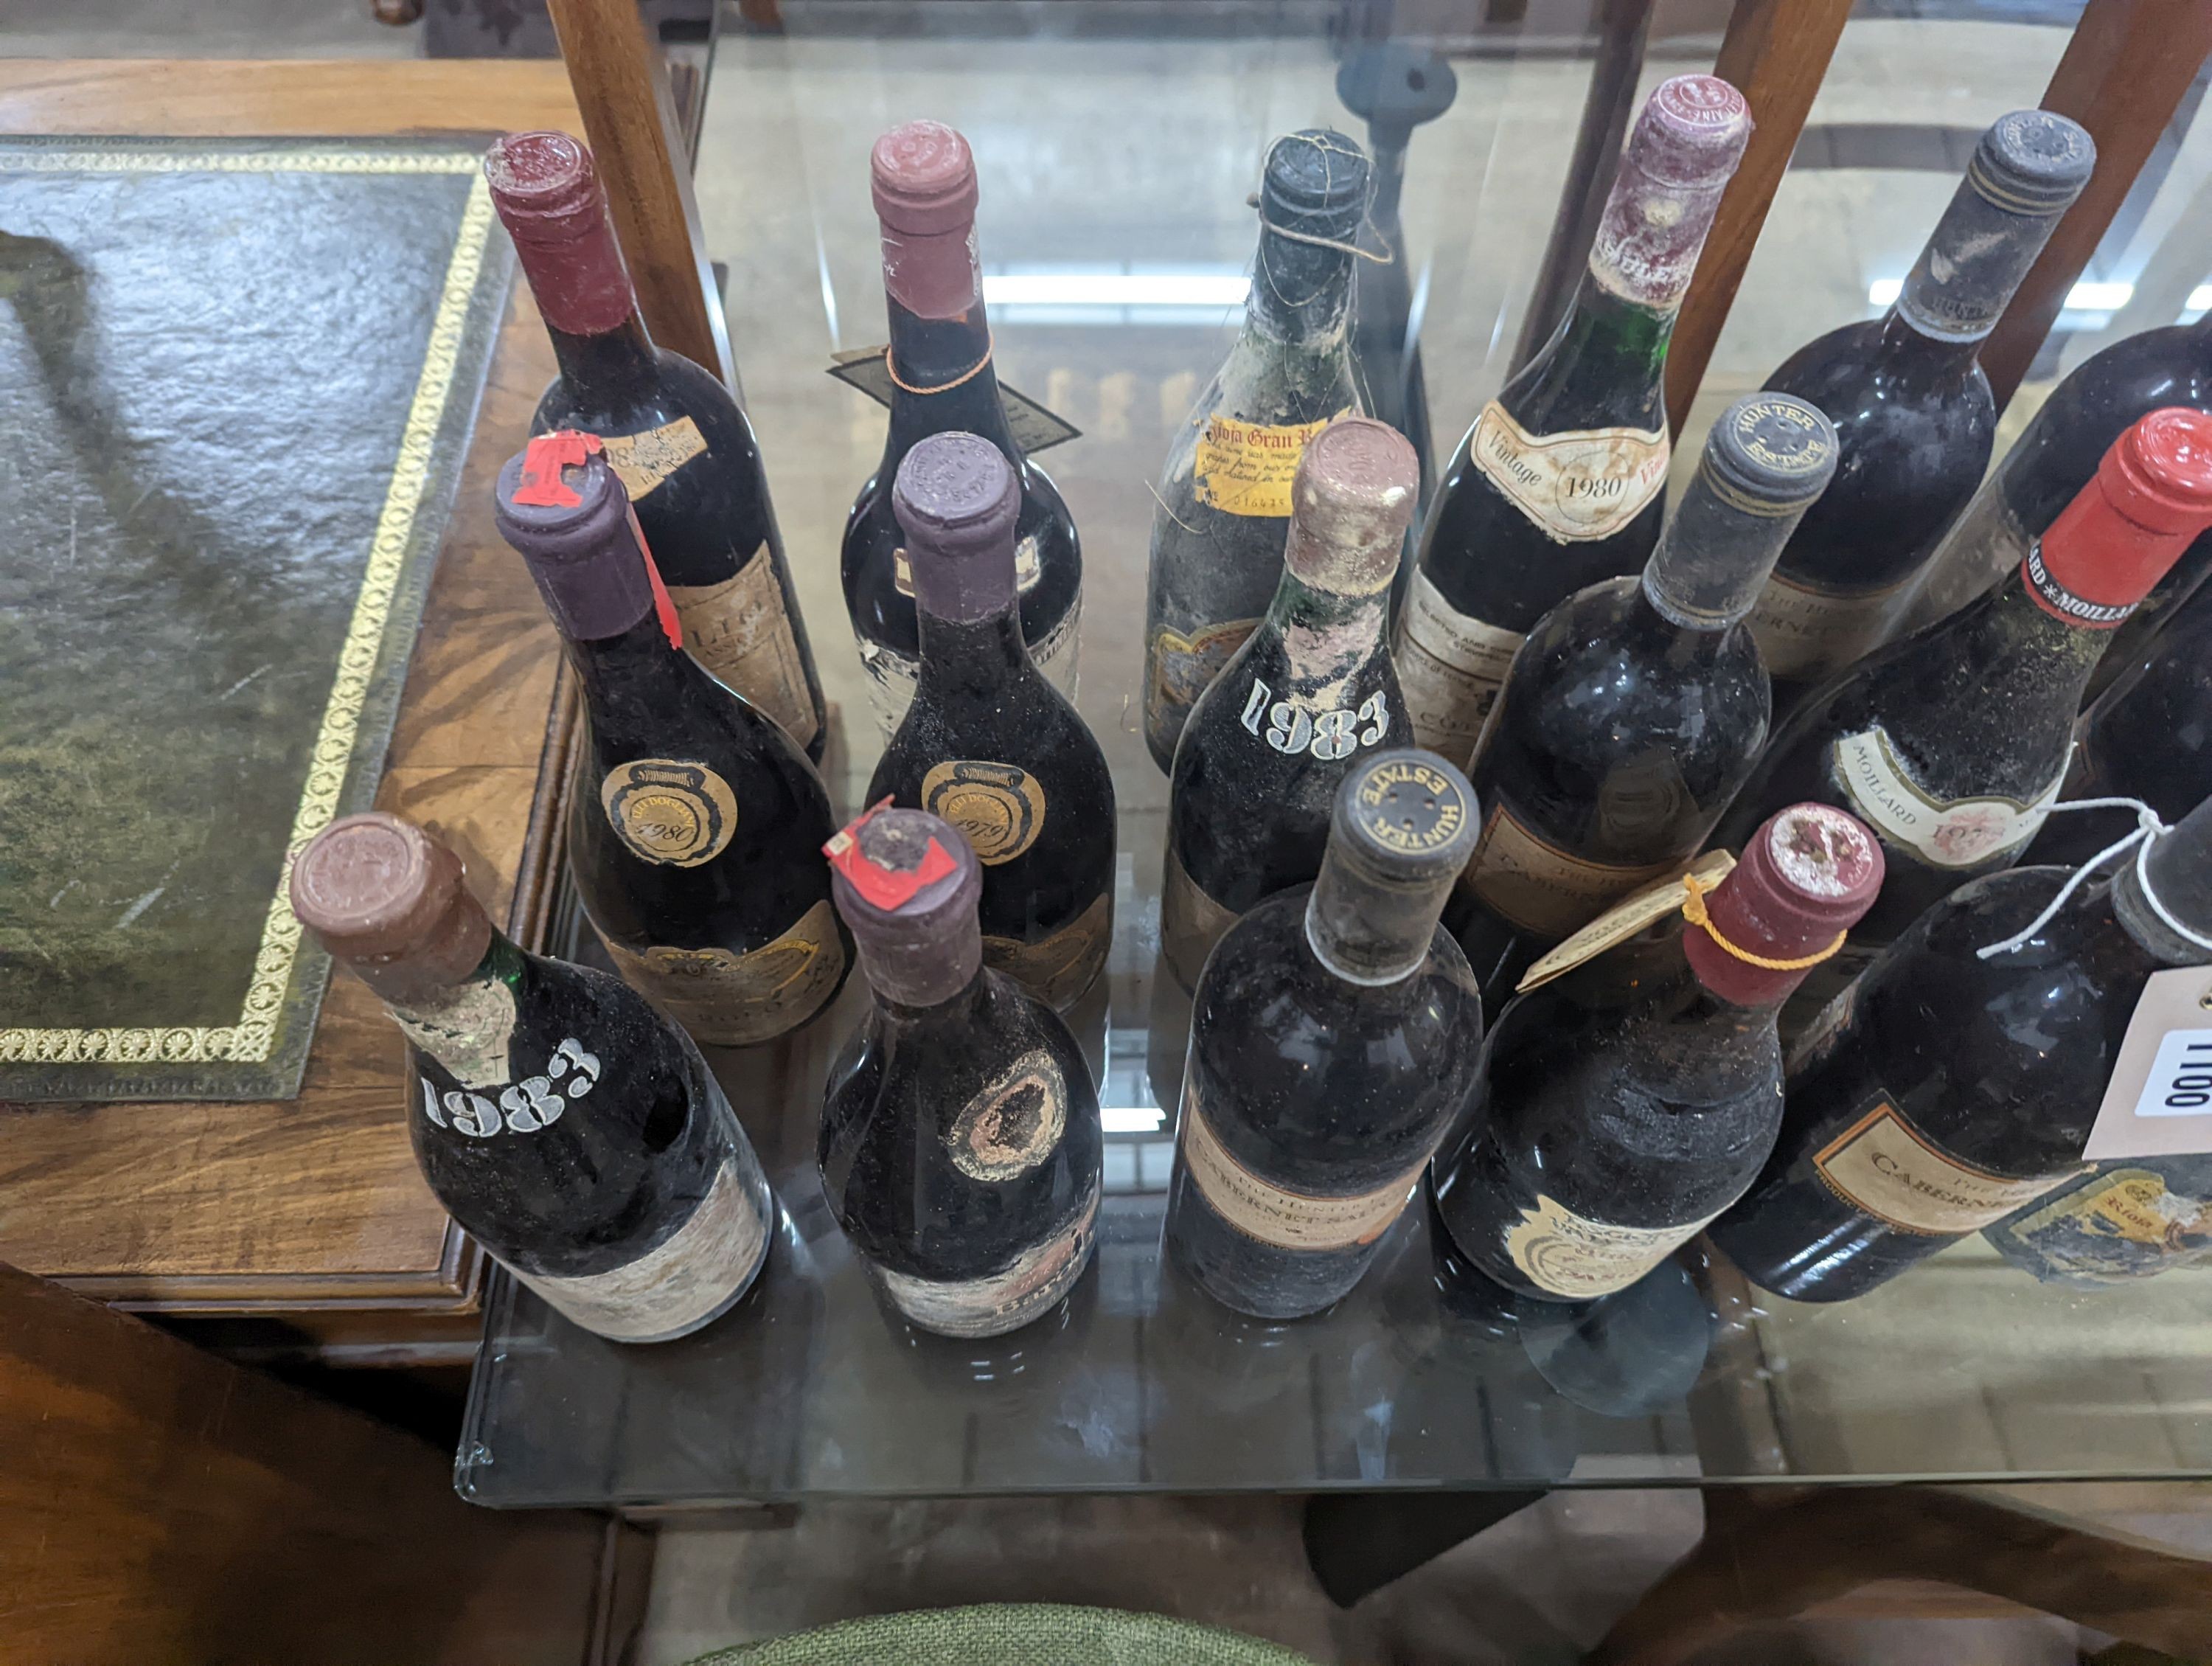 Twenty four bottles of assorted red wine